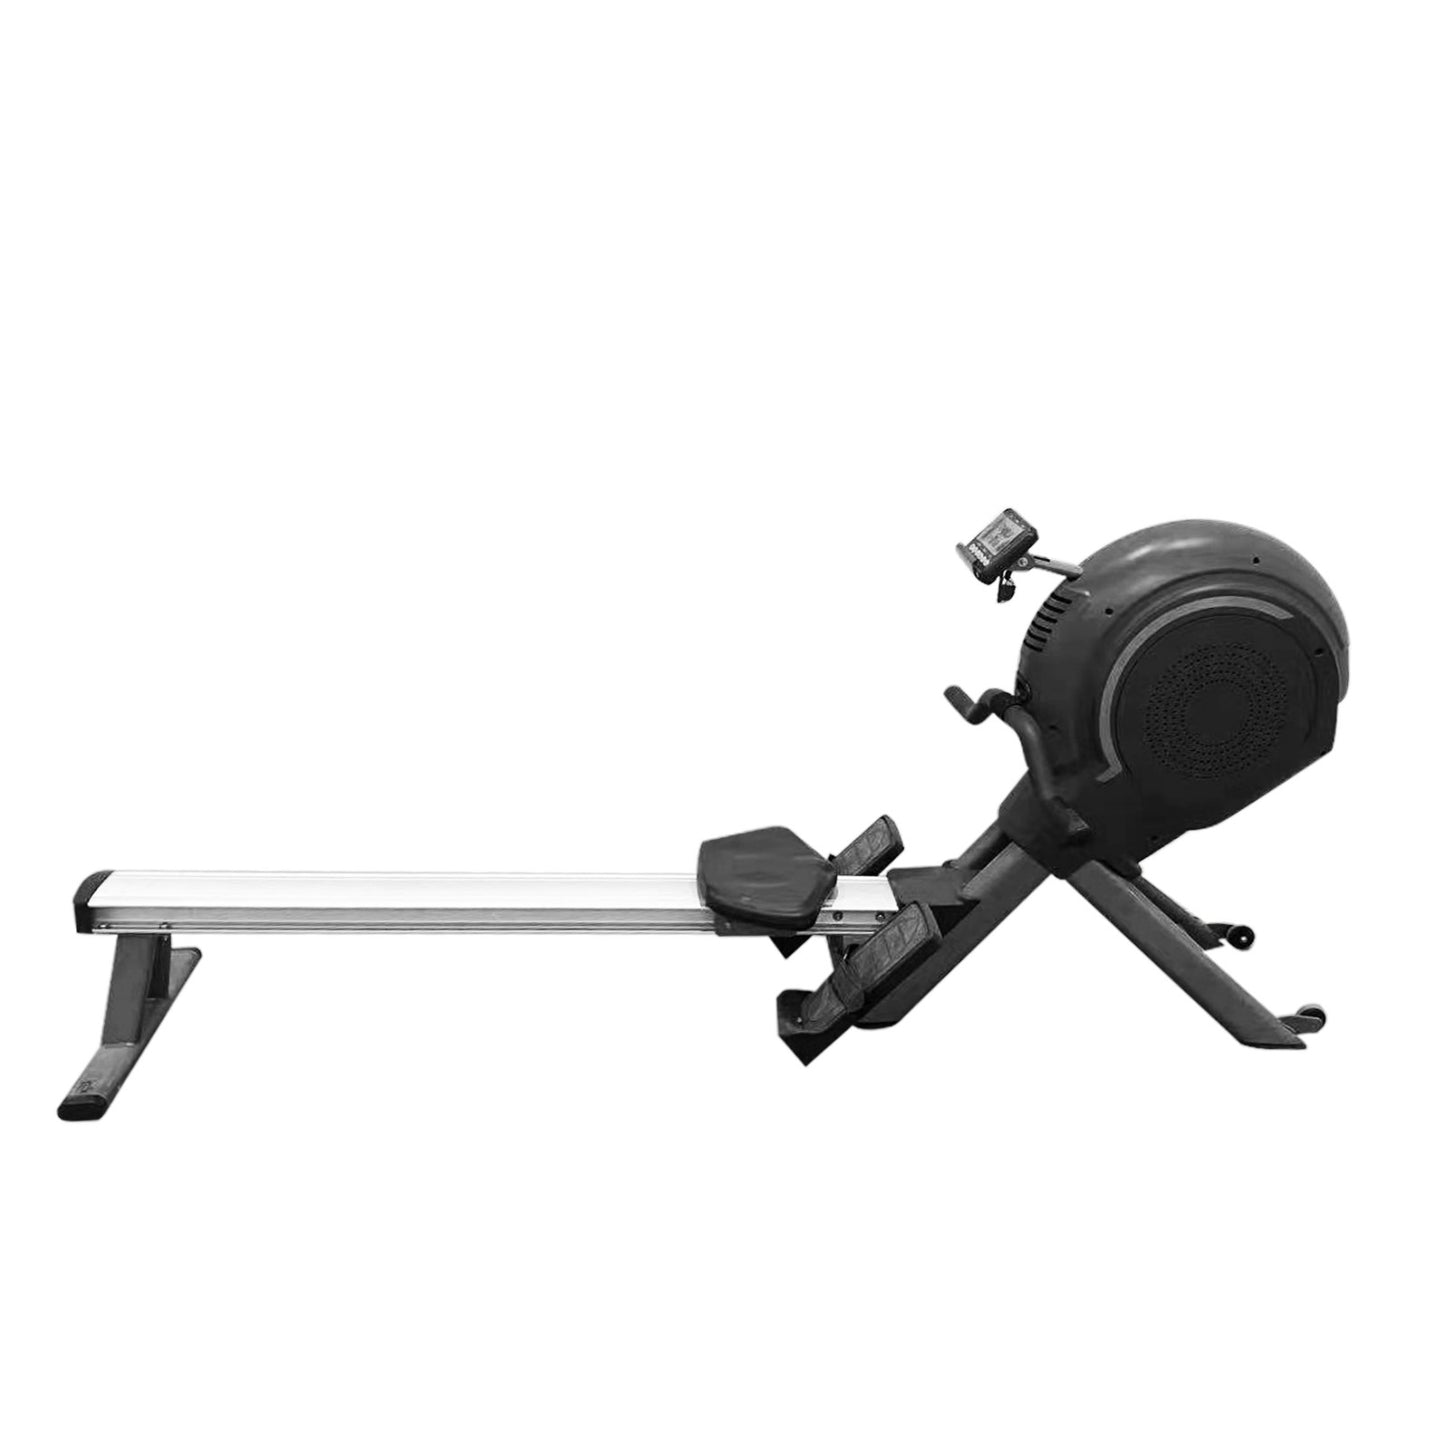 Primus Lean Magnetic Rower